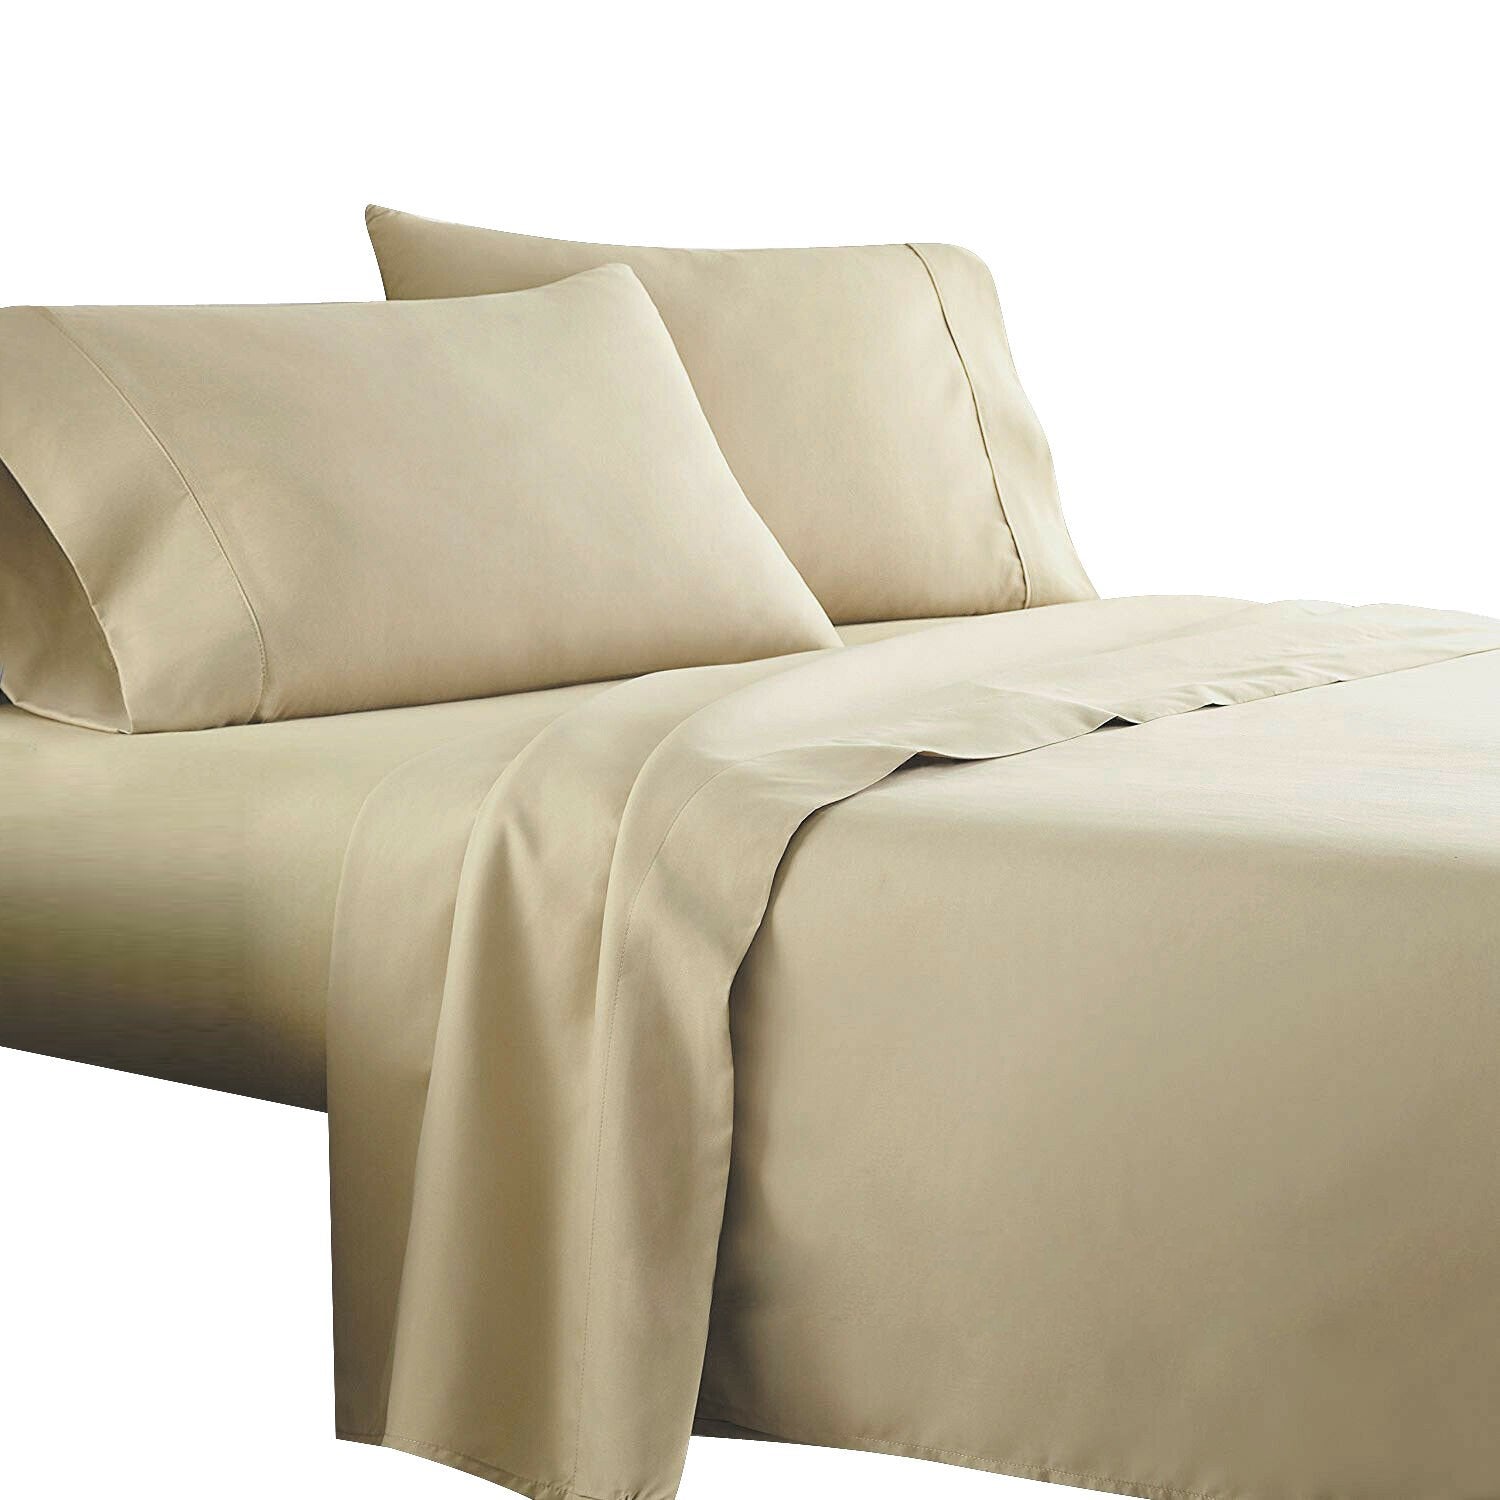 Cream 4pcs Flat Fitted Sheet Set Pillowcase 5 Size -1000TC